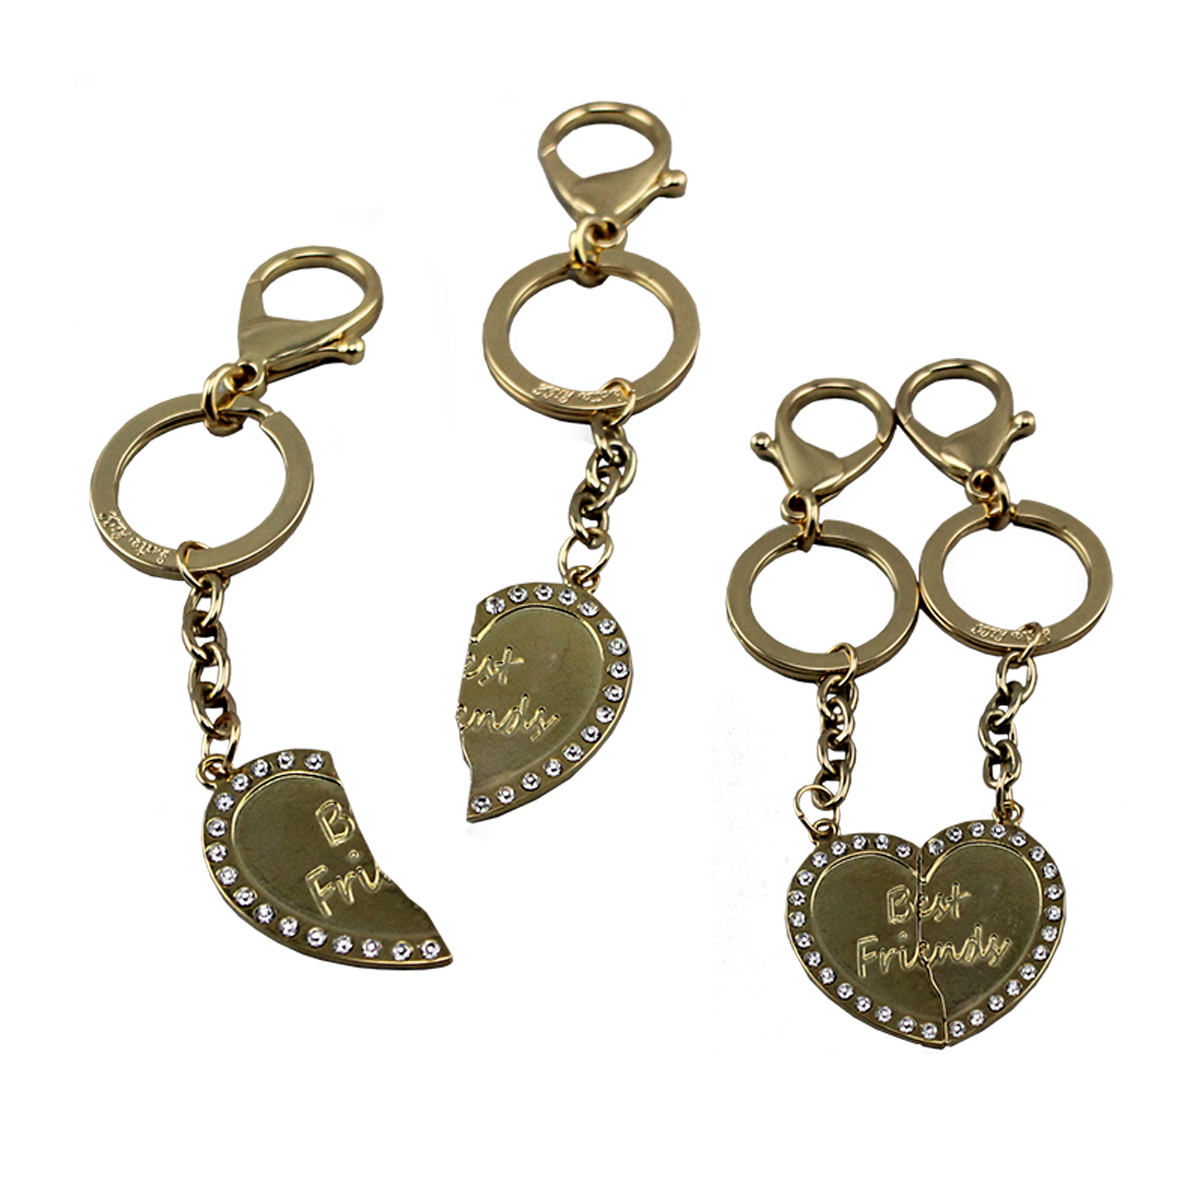 Heart shape key chain